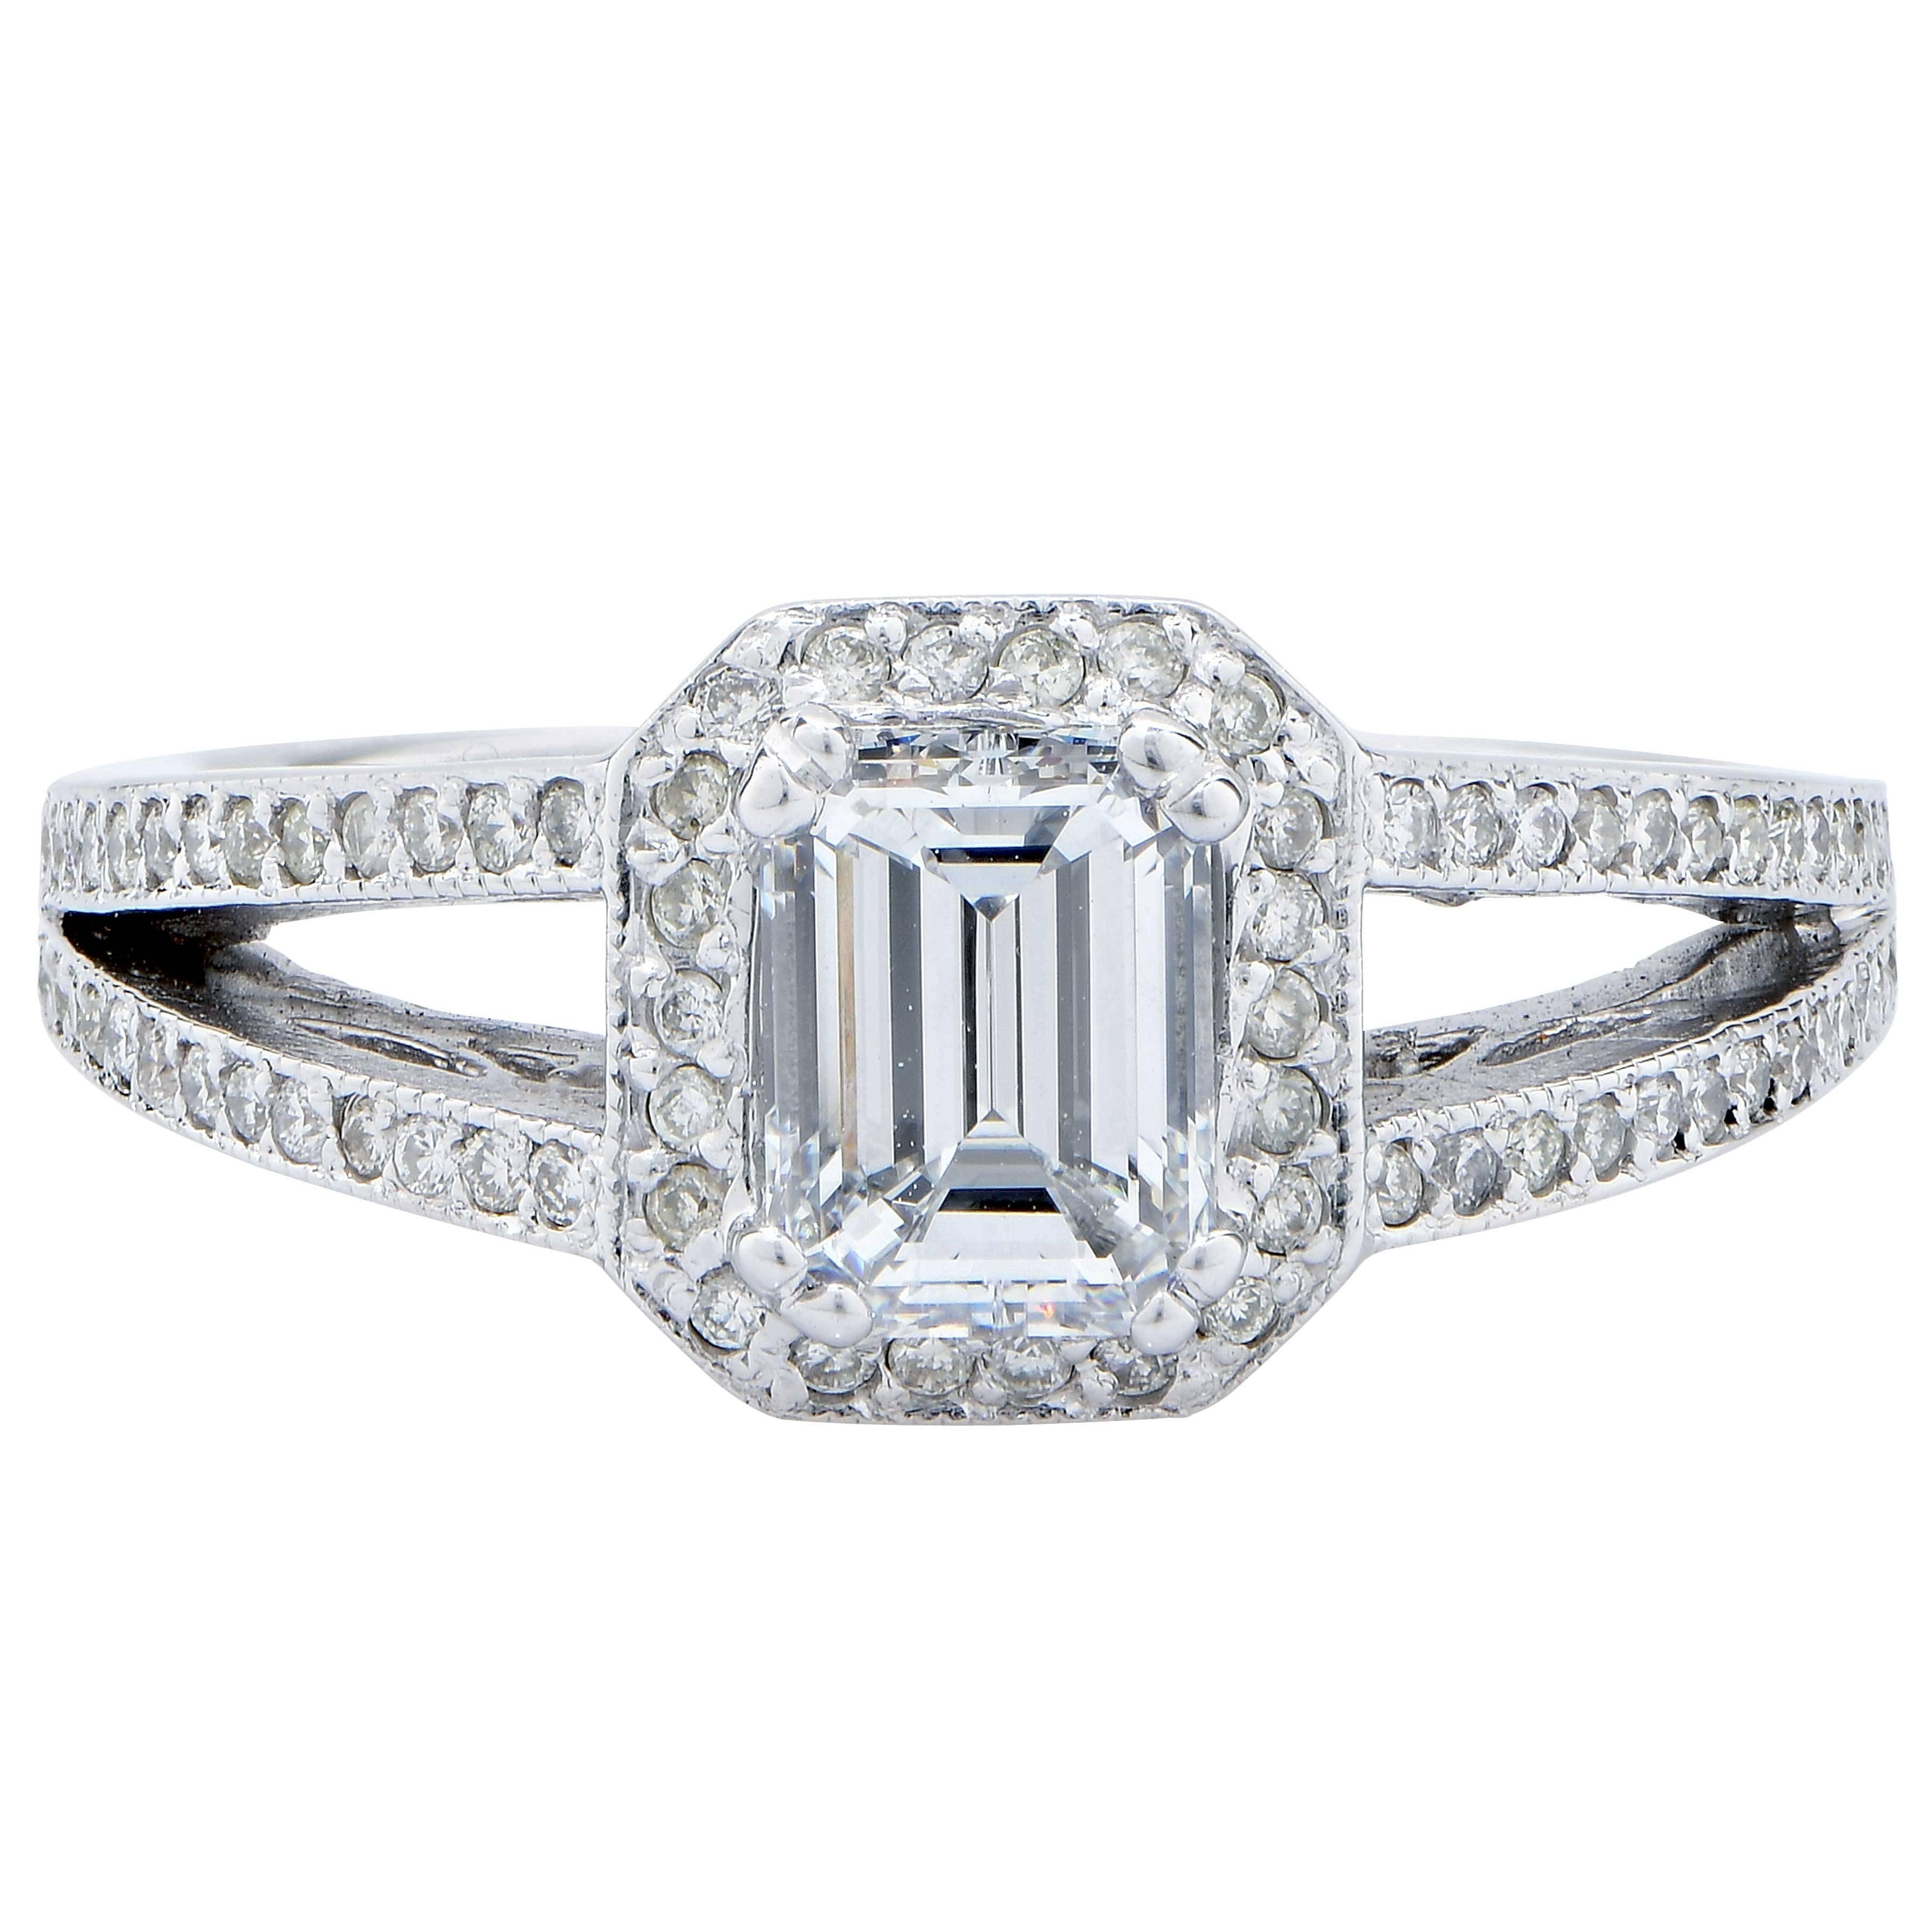 1.01 Carat GIA Graded D VVS2 Emerald Cut Diamond in 18 Karat White Gold Ring 1